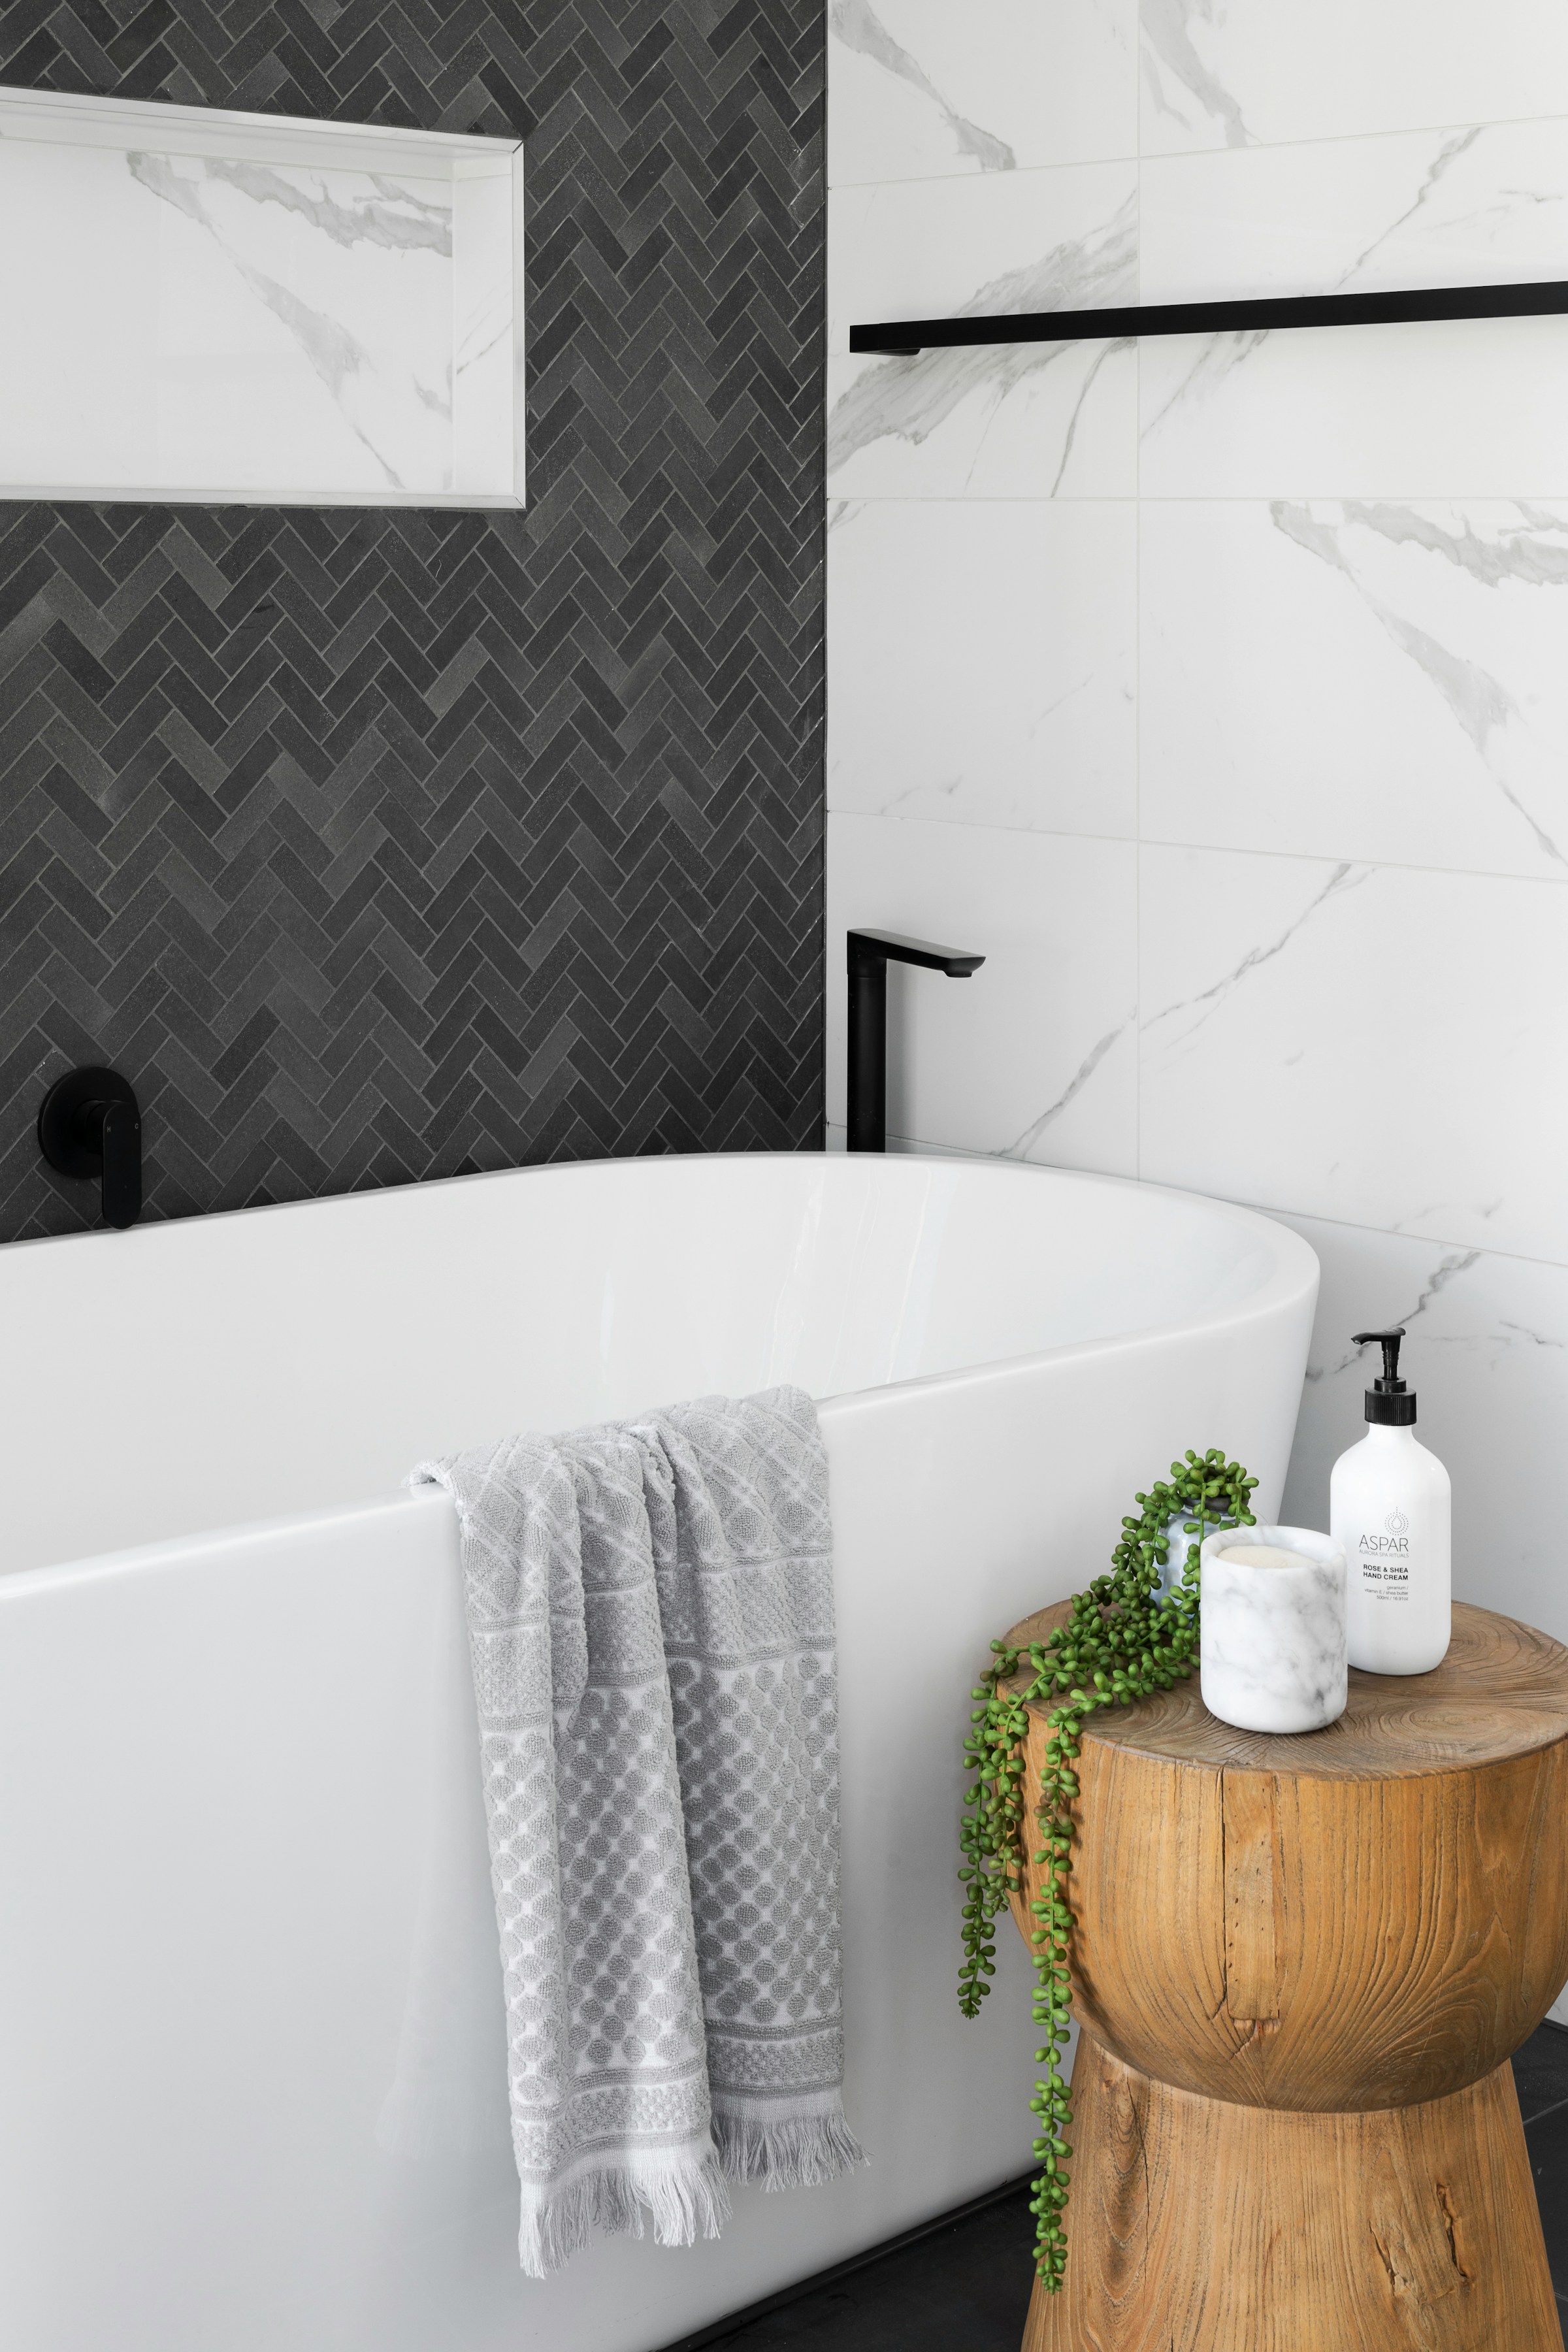 A white ceramic bathtub | Source: Unsplash